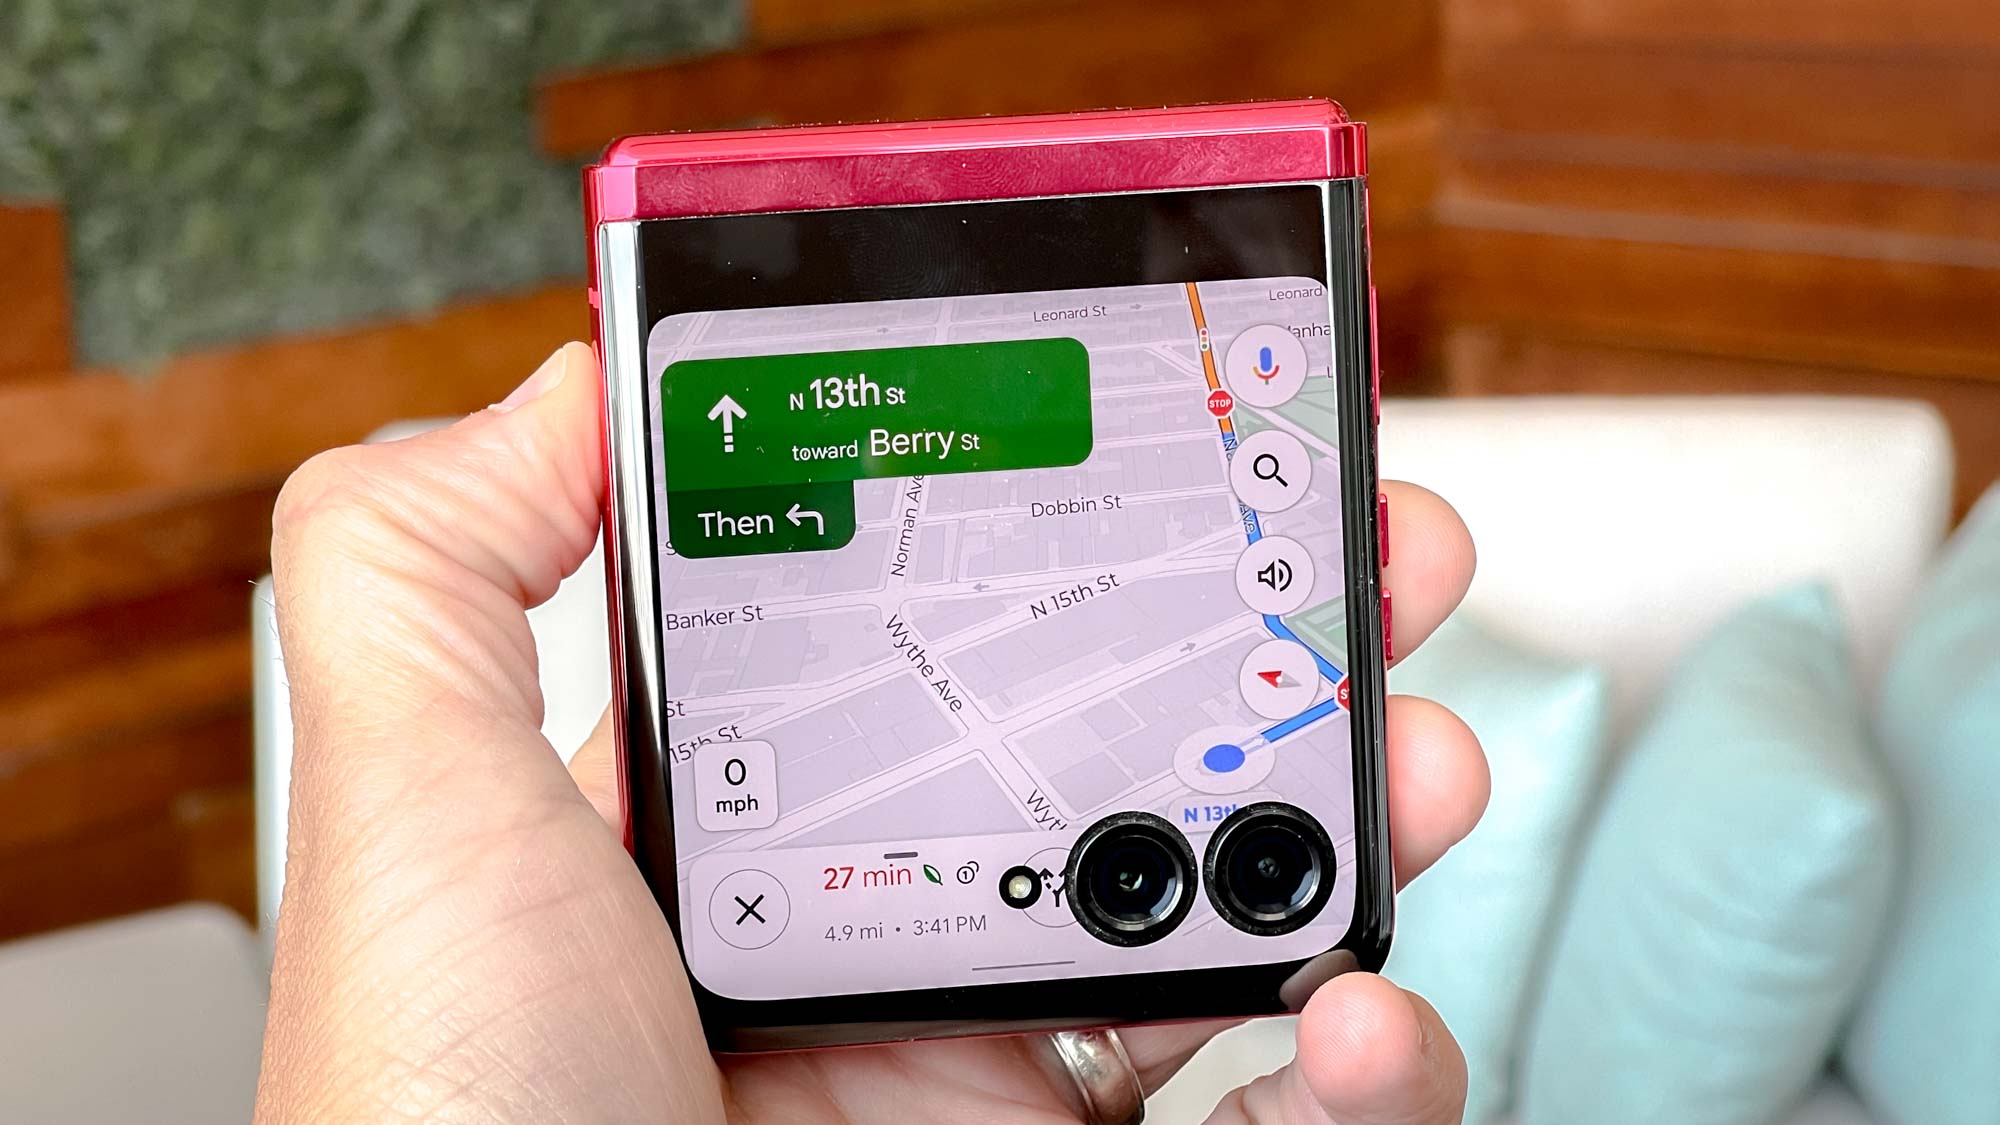 Motorola Razr + Google Maps on the front screen